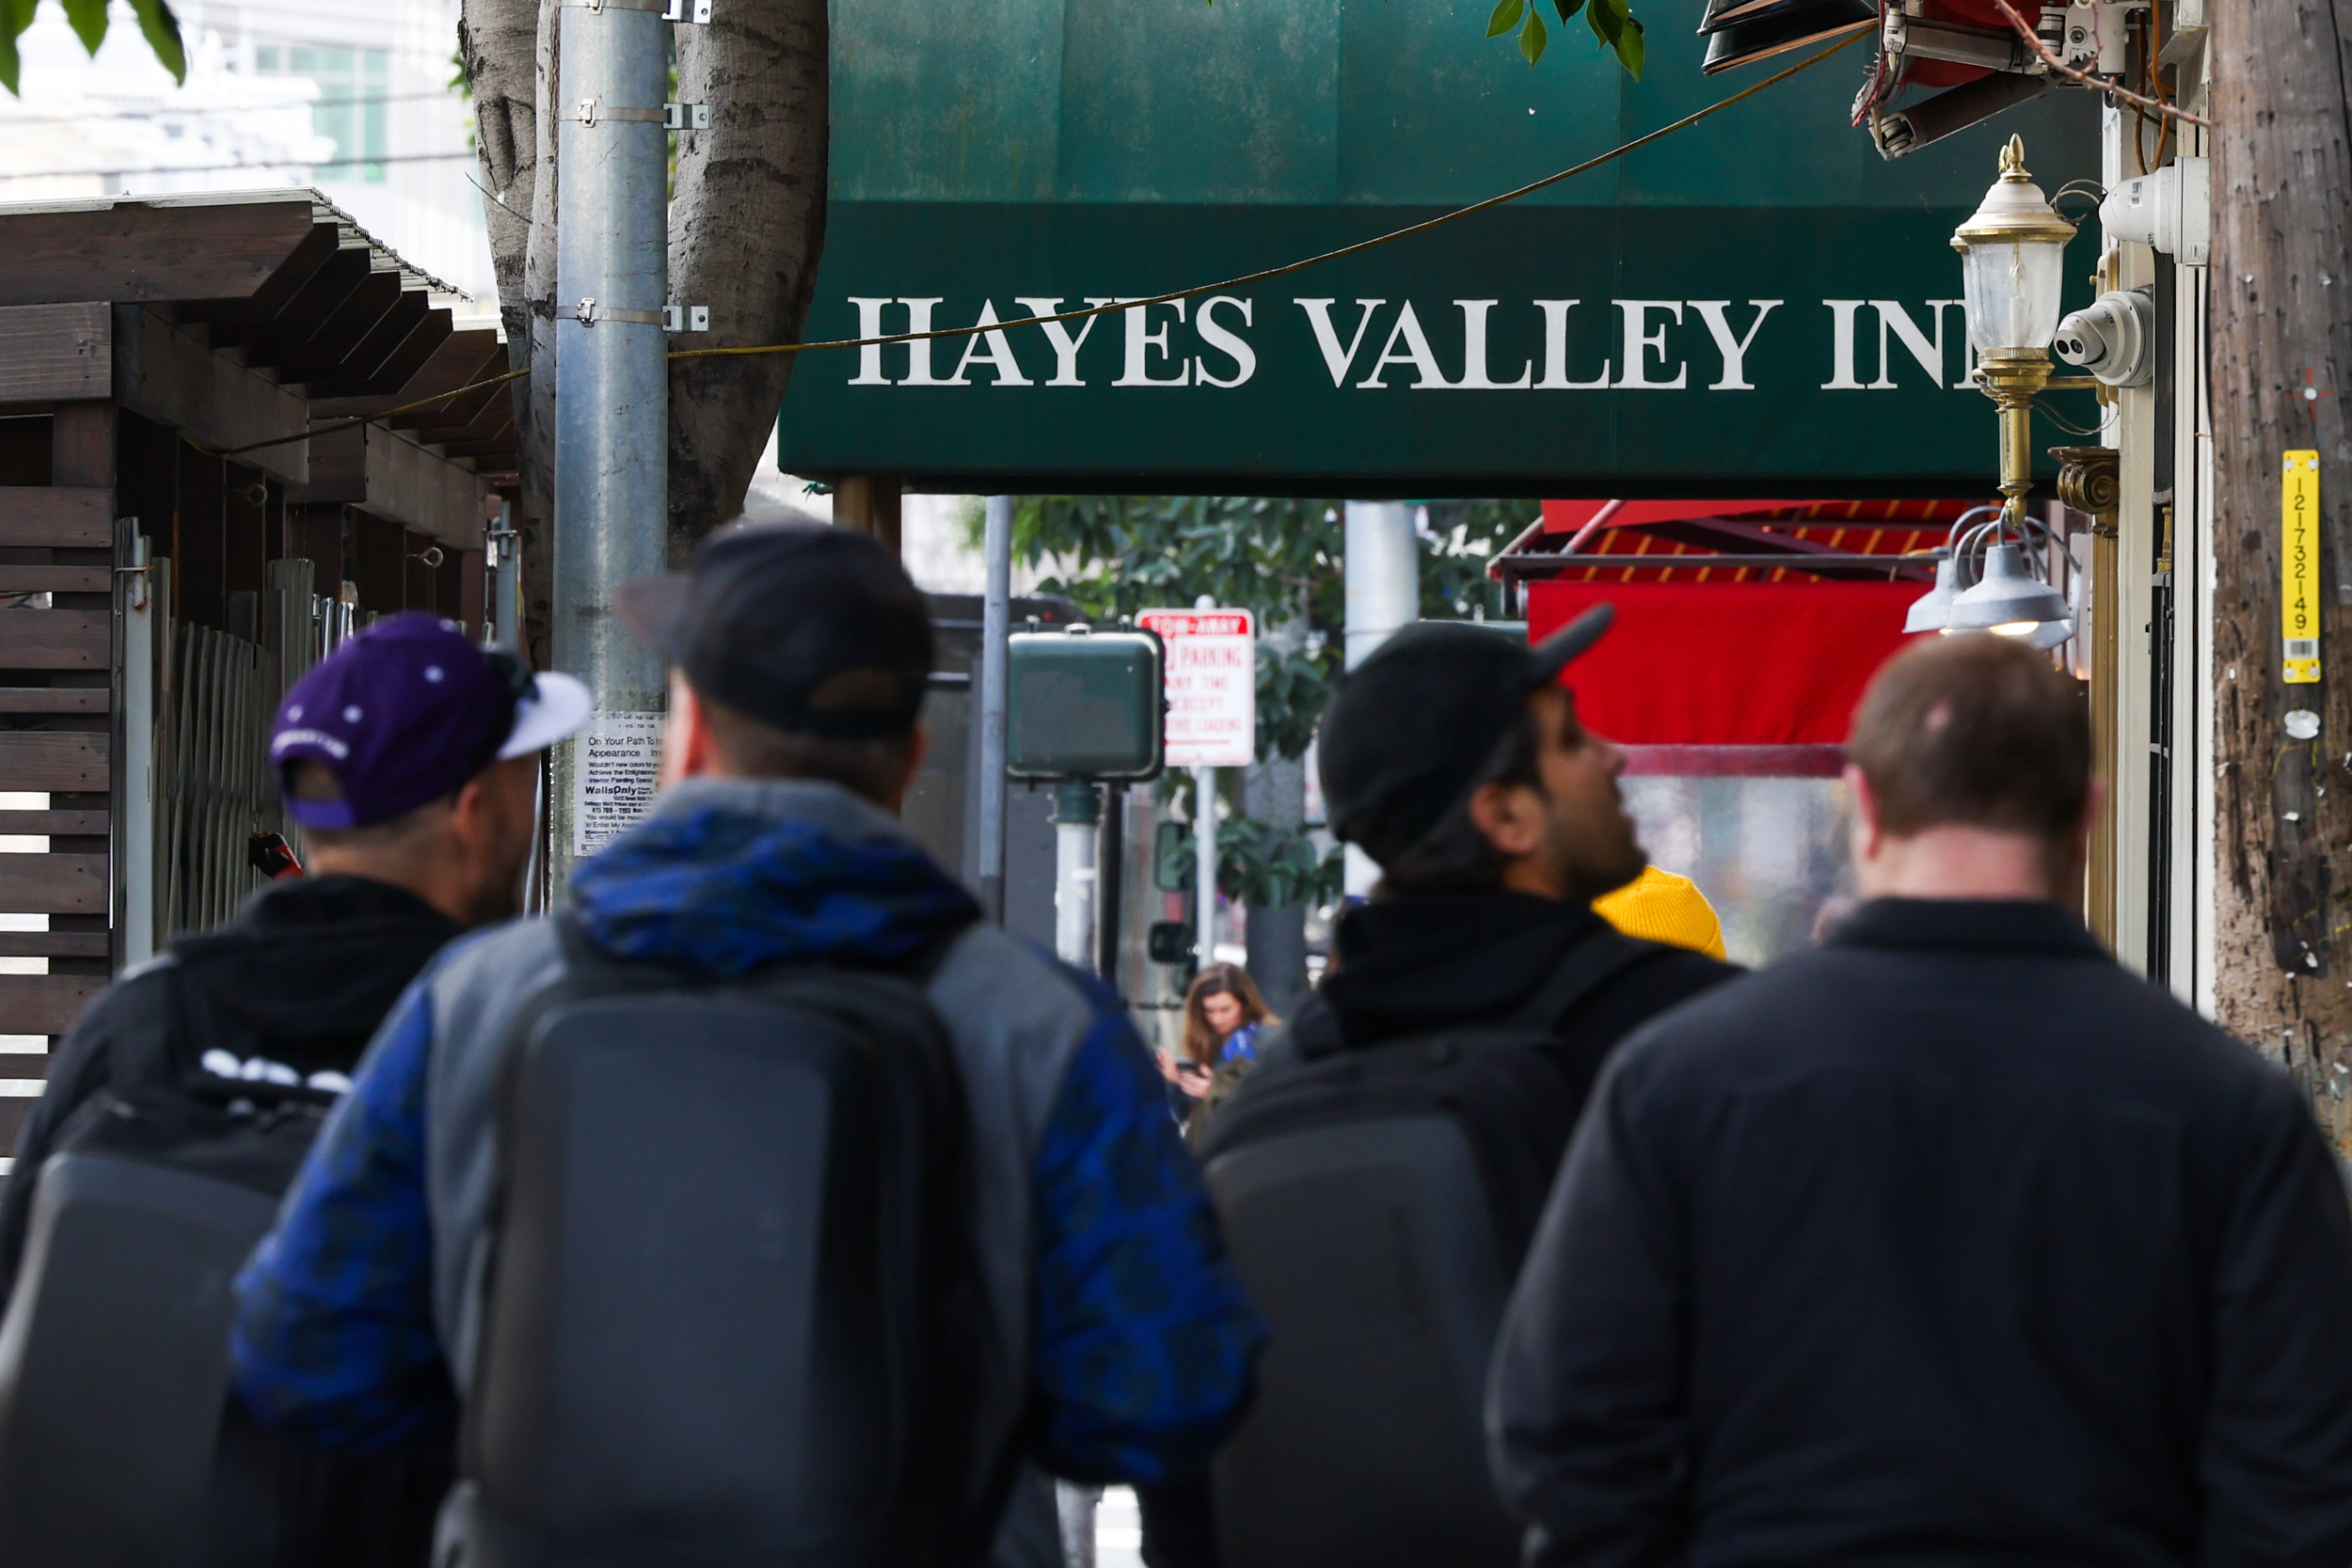 Pedestrians walking on a street in Hayes Valley in San Francisco.